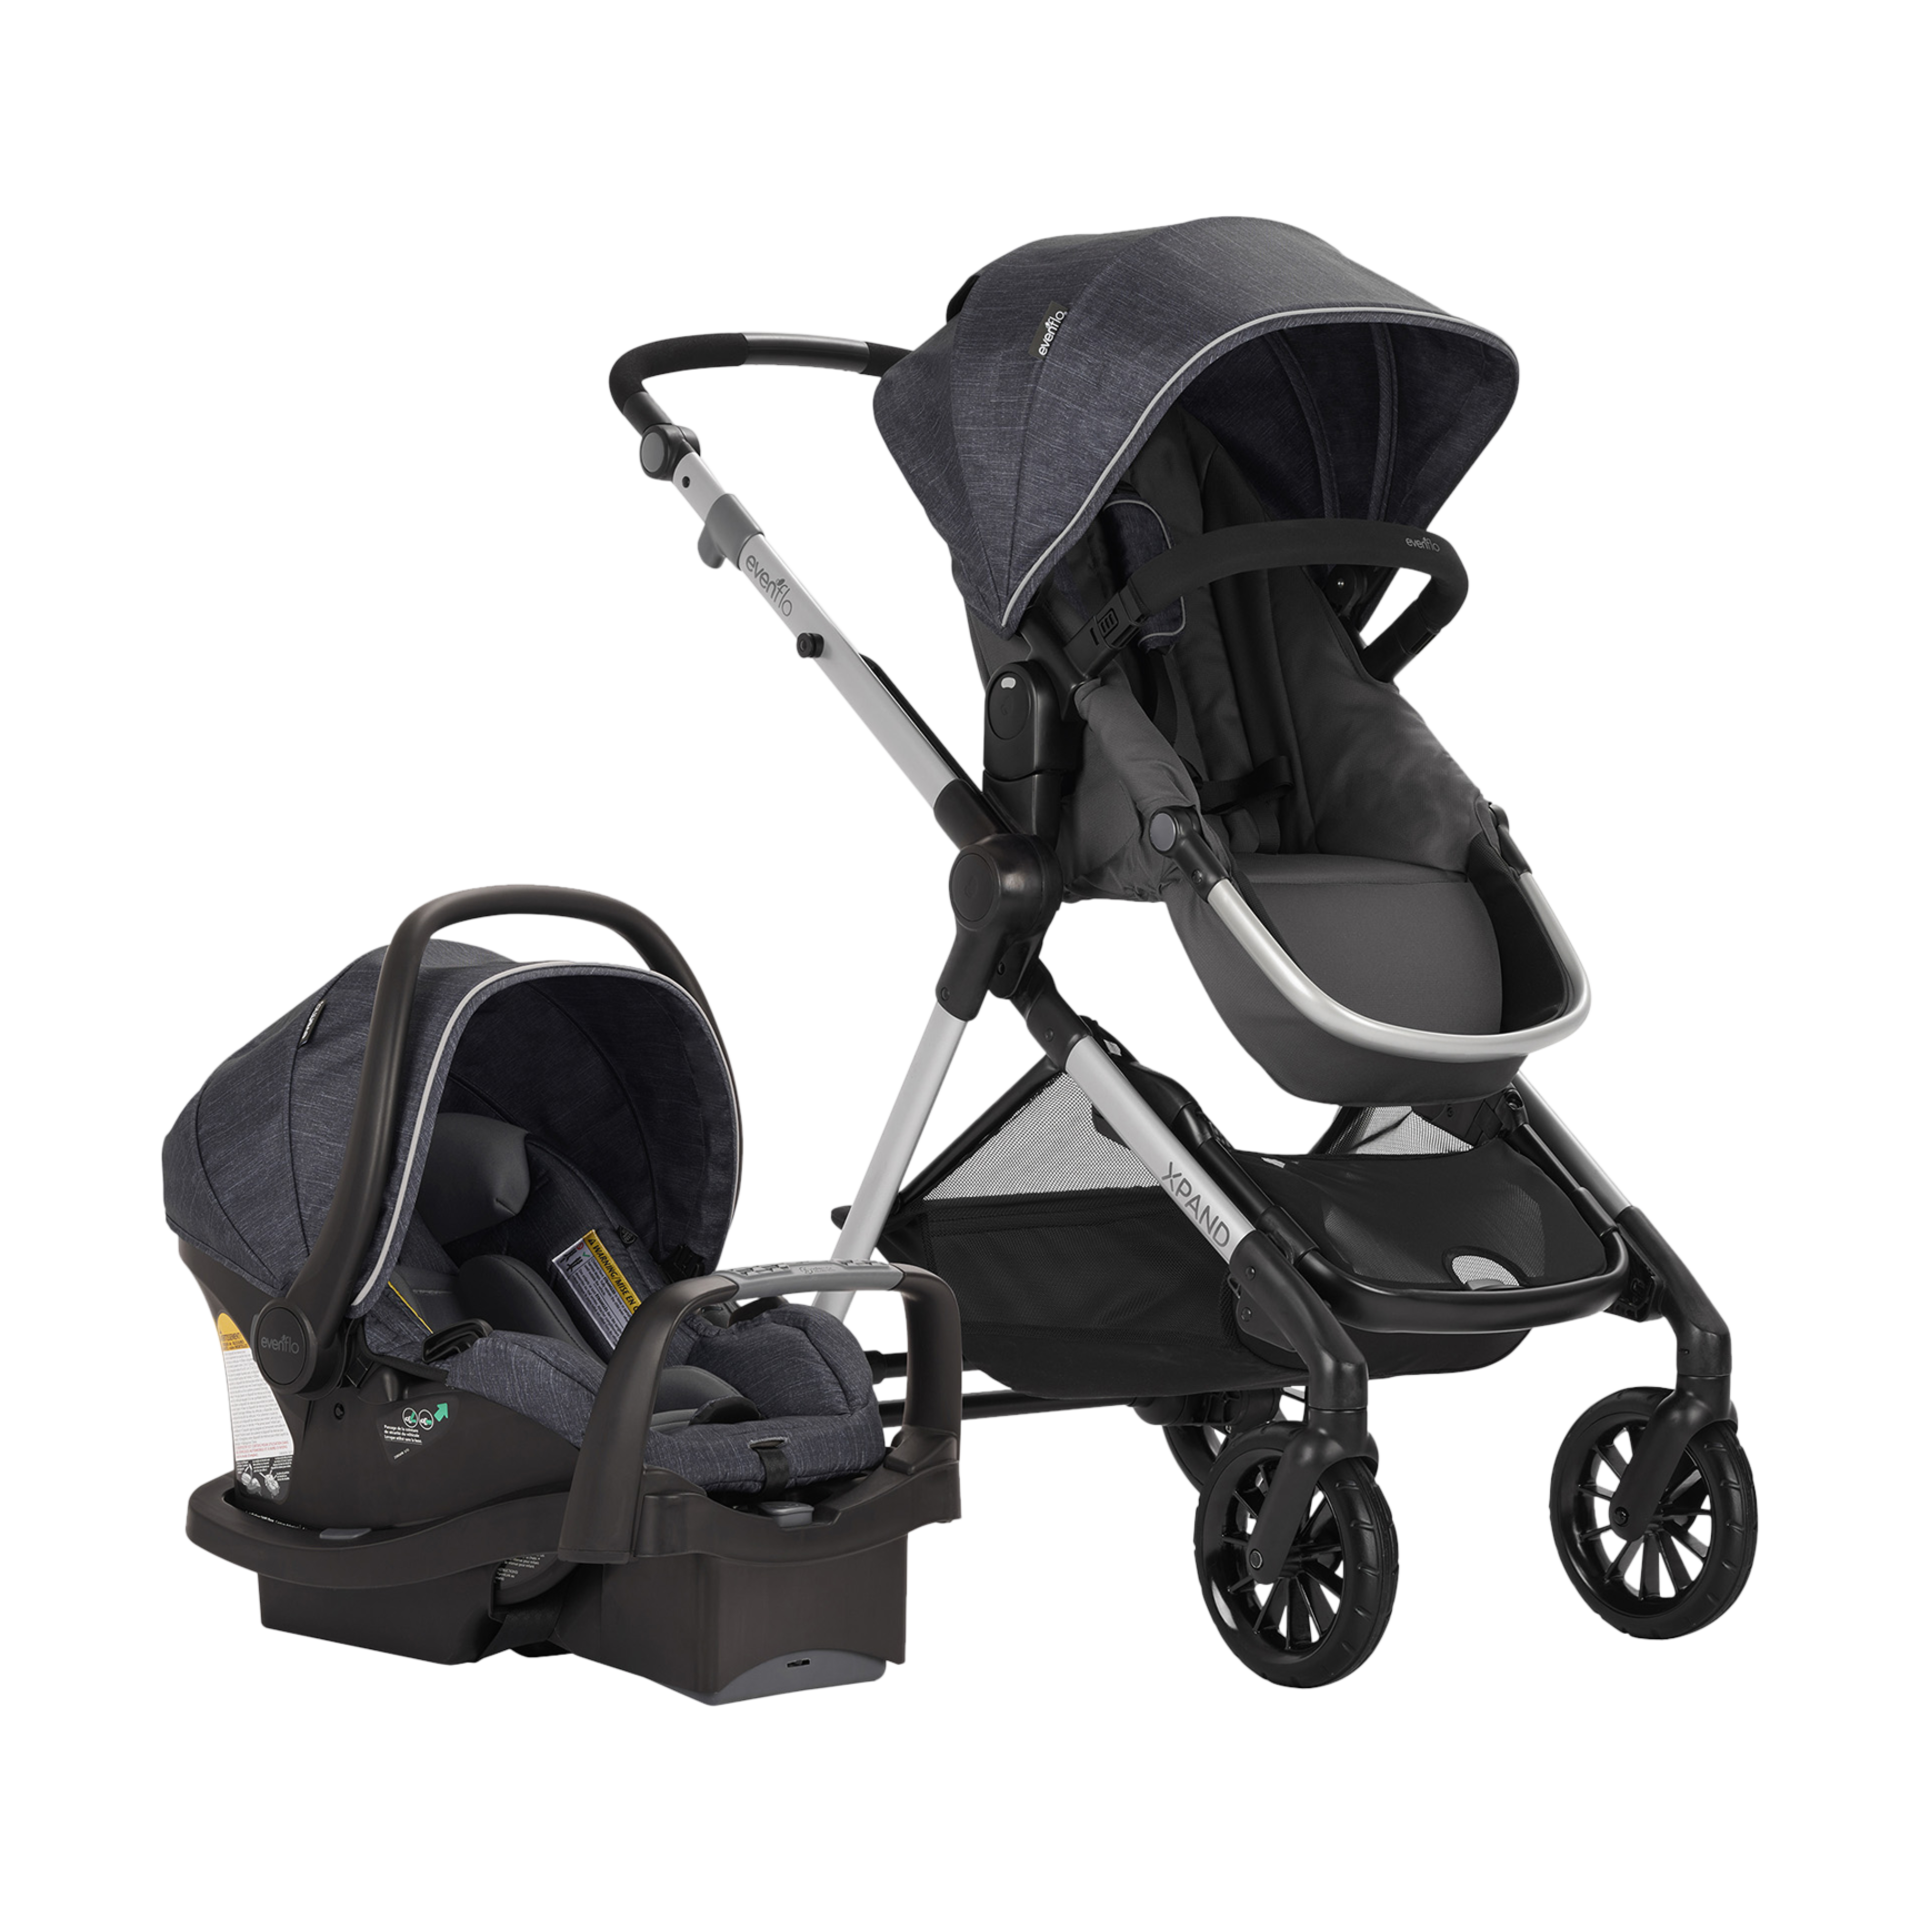 evenflo pivot standard stroller with safemax infant car seat